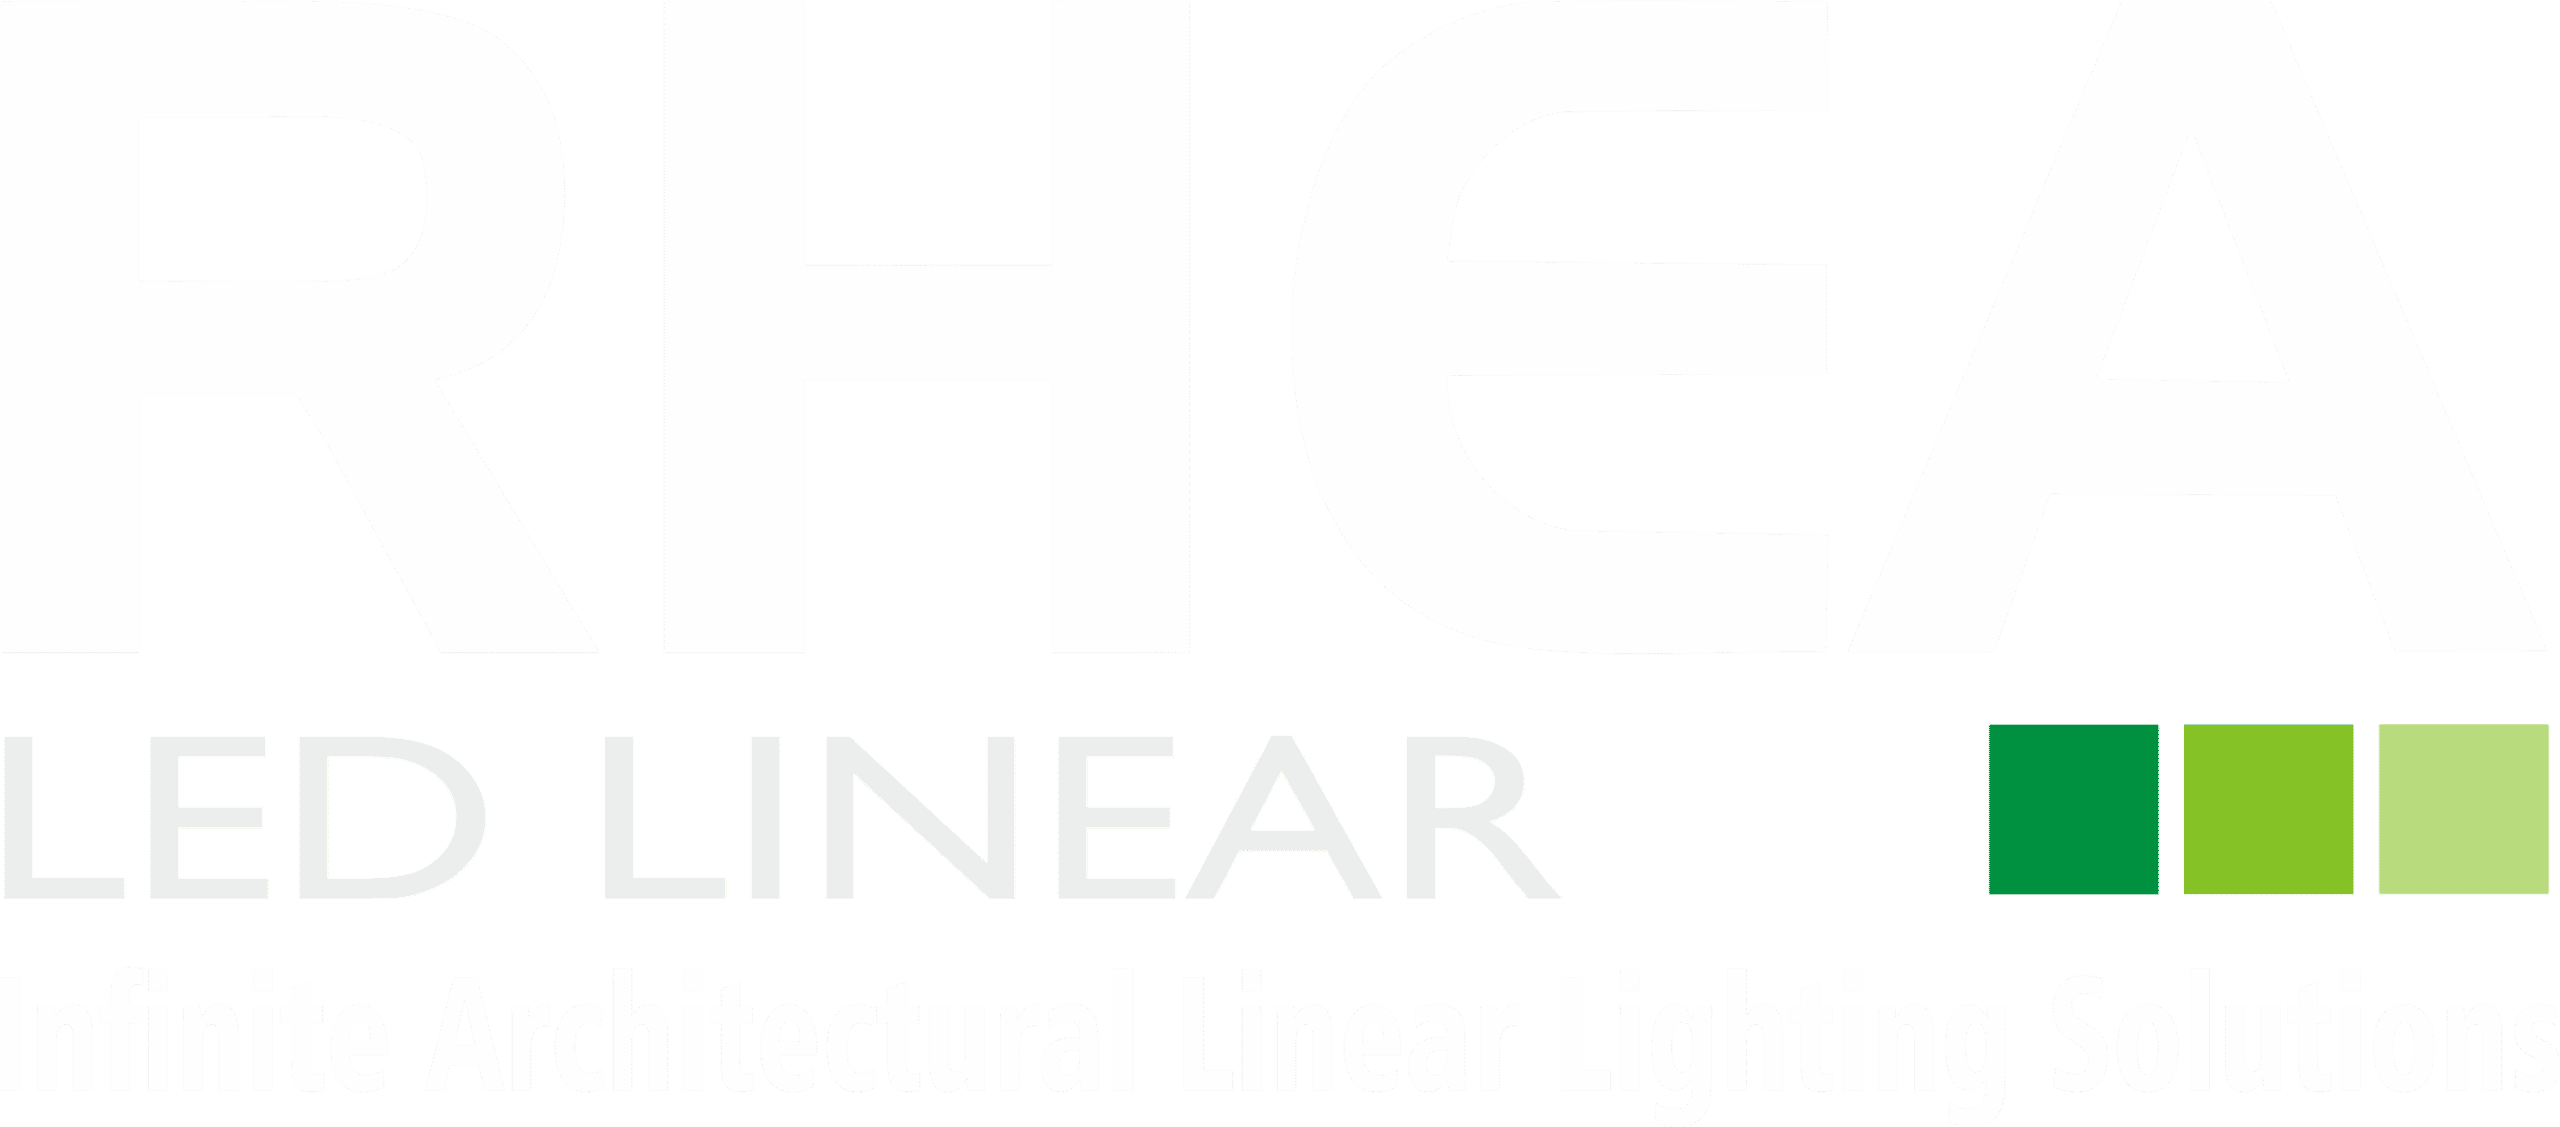 RHEA Logo - White